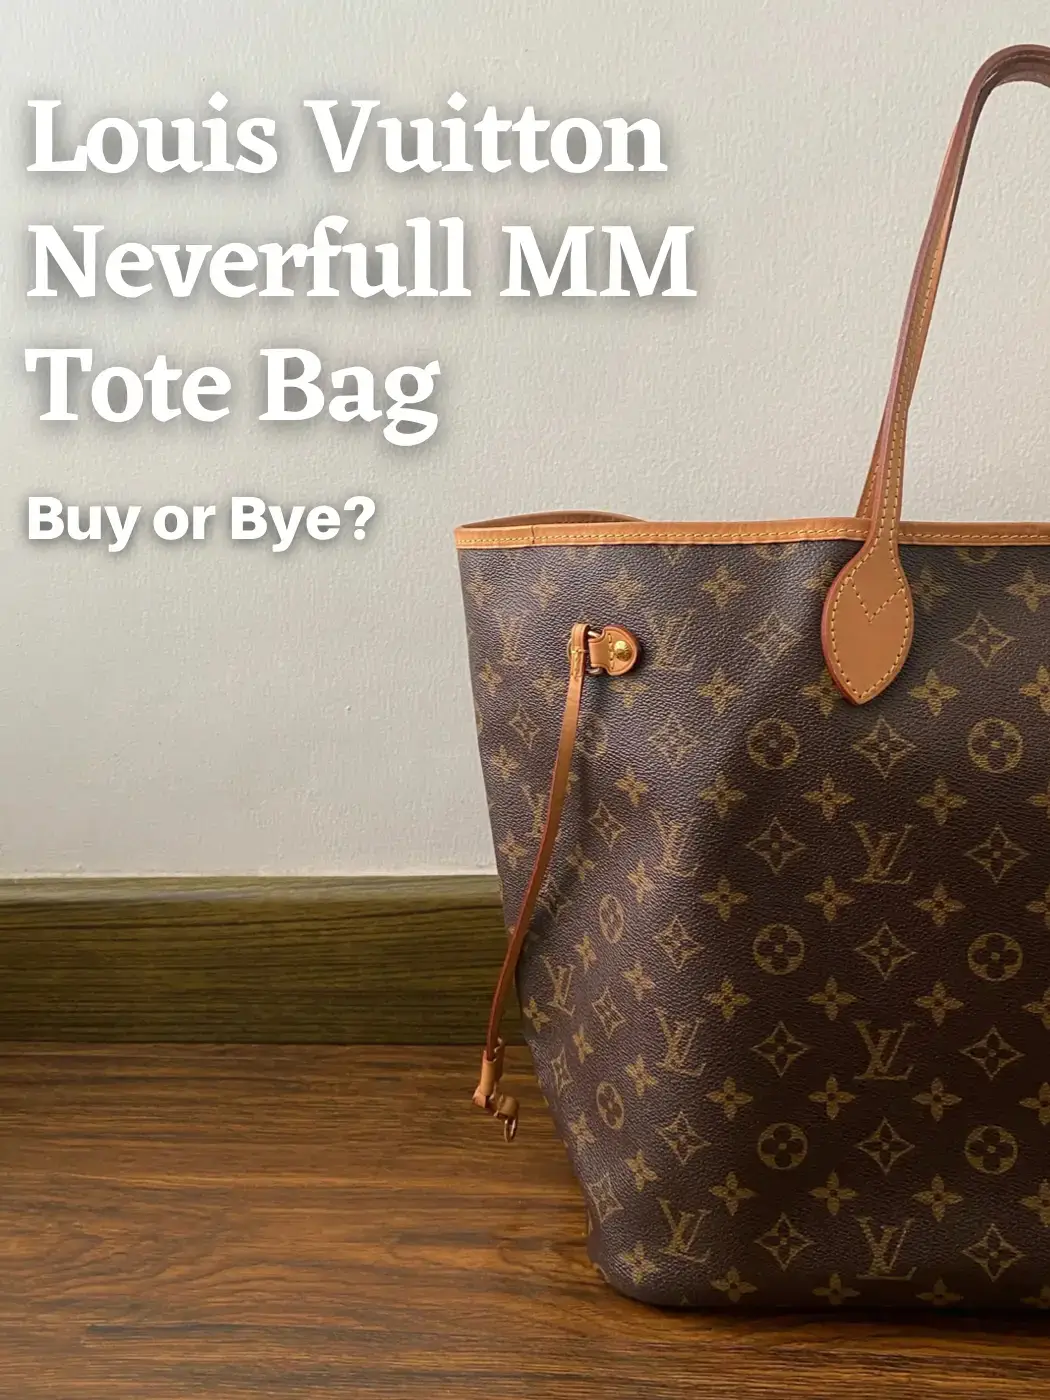 LV Neverfull MM Tote Bag (buy or bye?!)